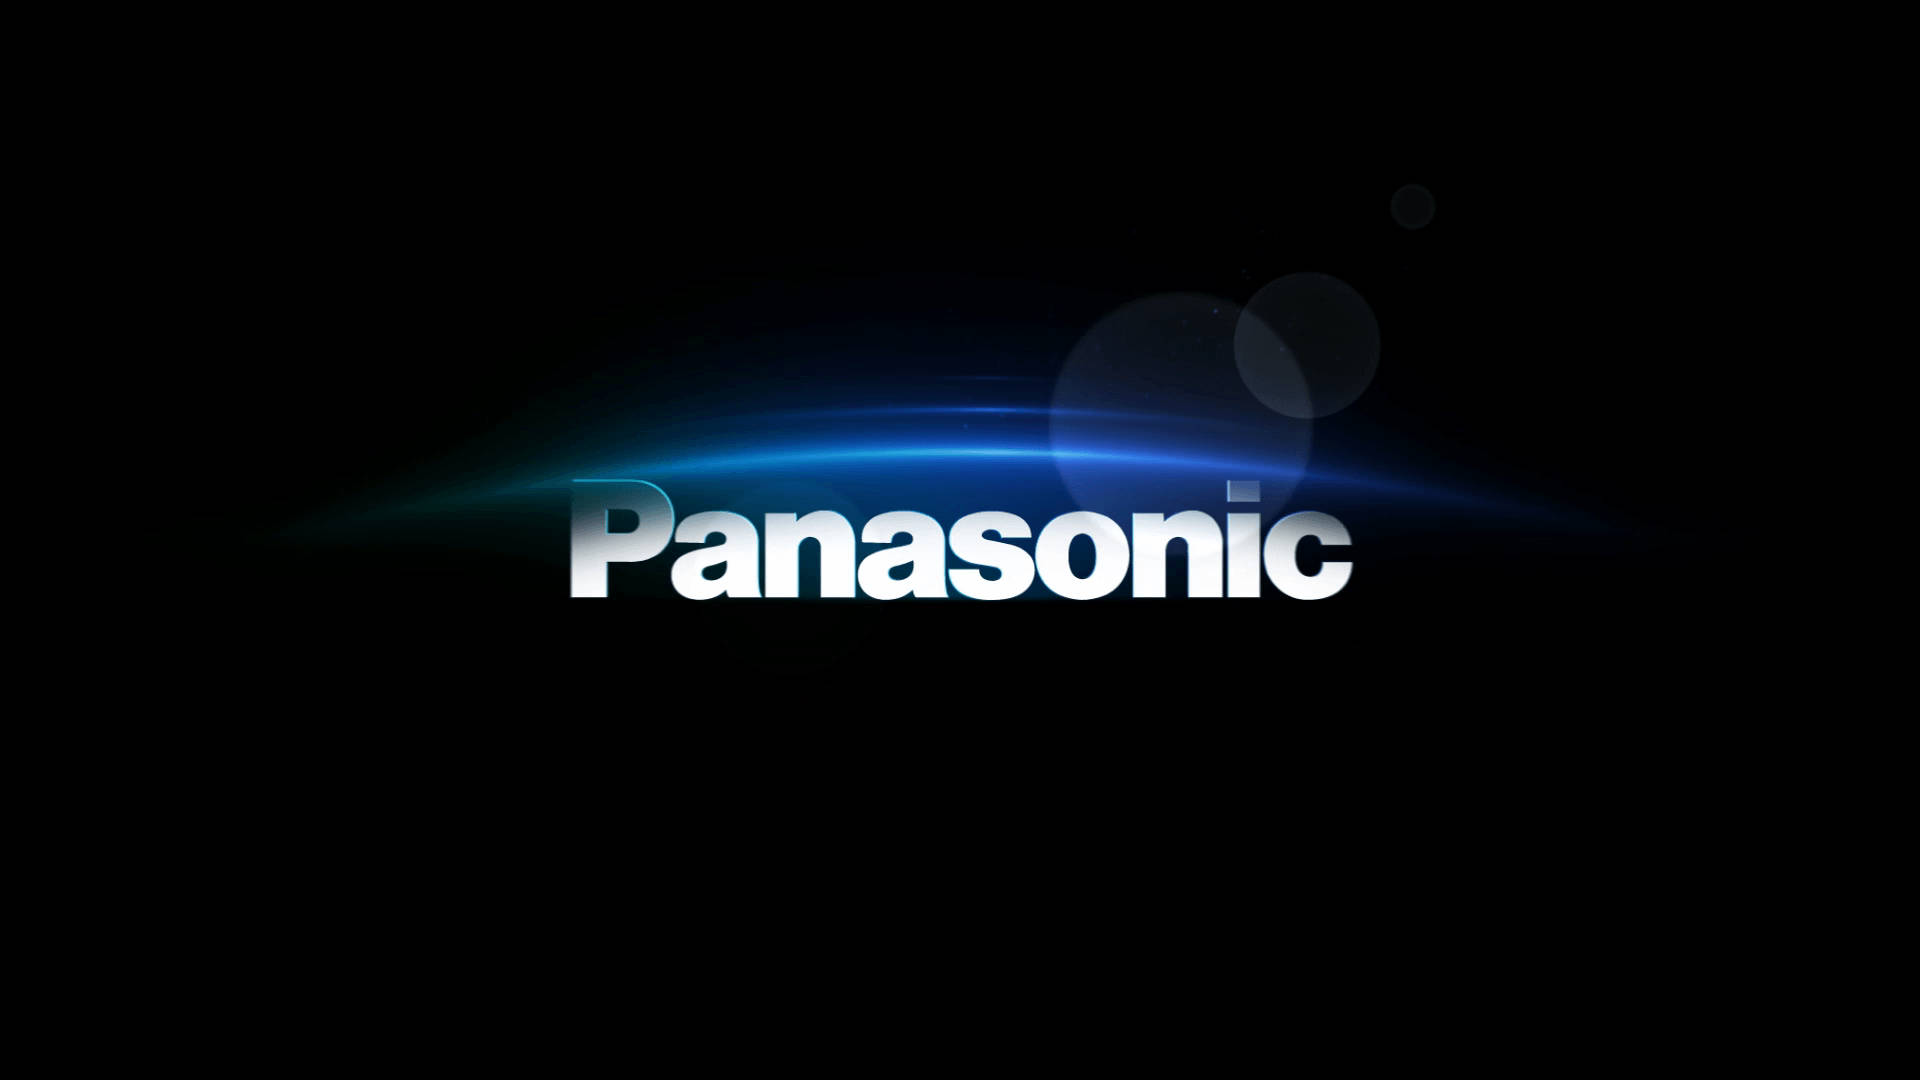 Panasonic Blue And Black